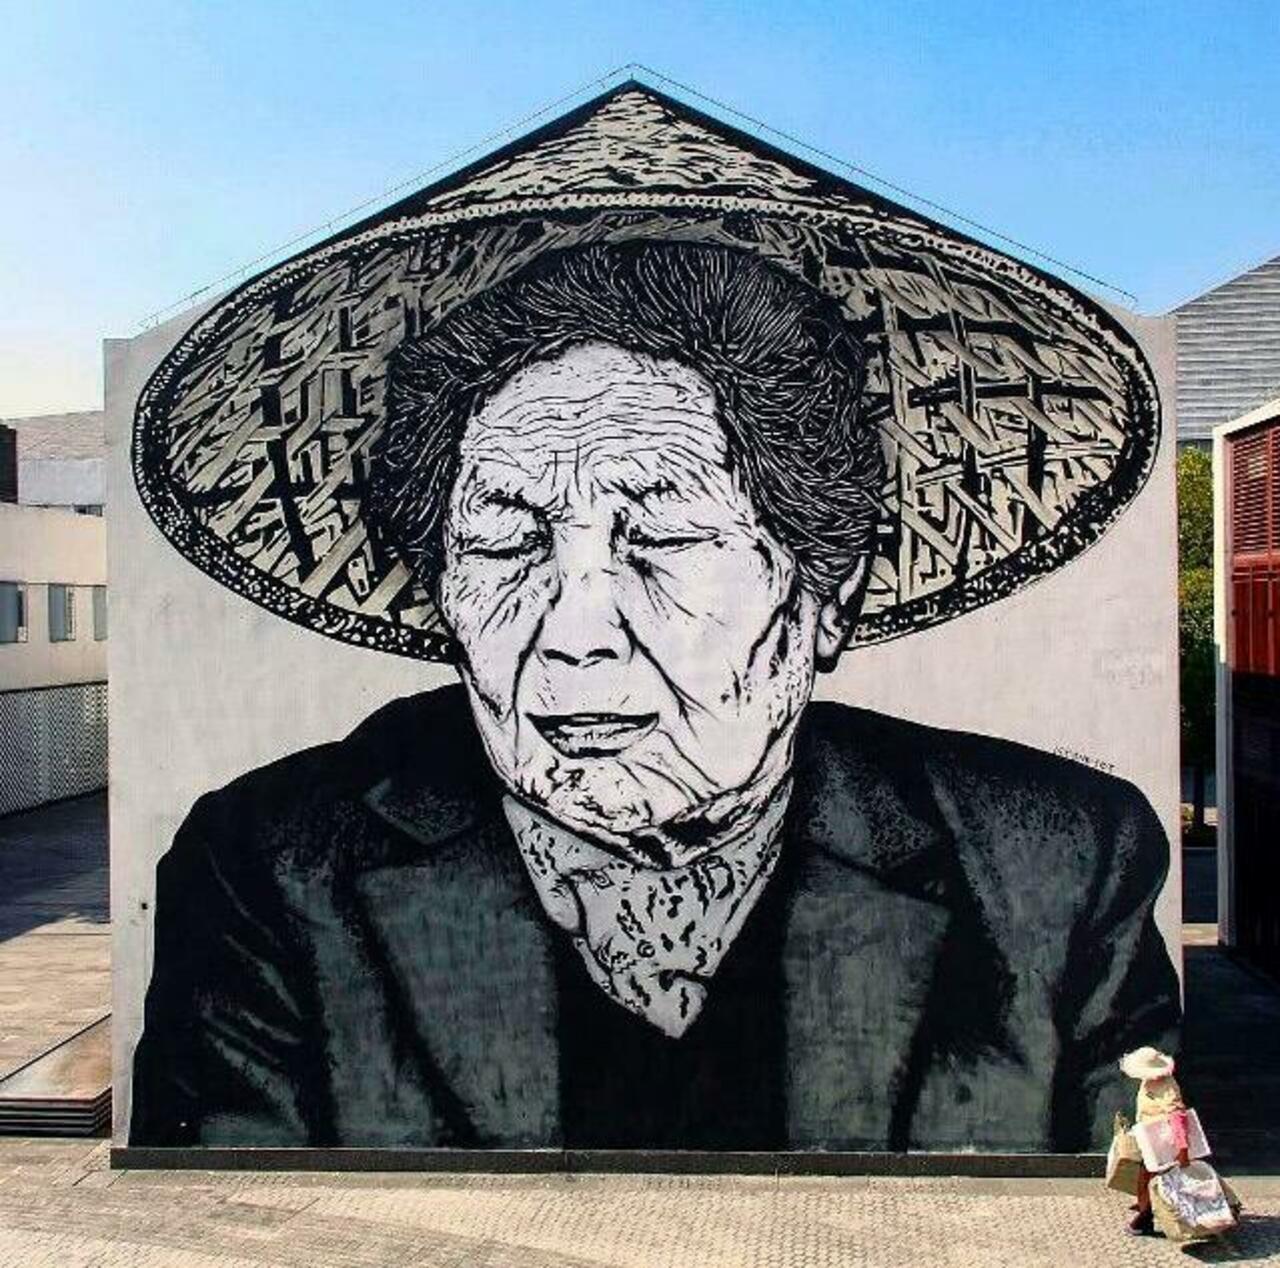 New Street Art by icy&sot in Shanghai  

#art #graffiti #mural #streetart http://t.co/ZtlUPiiVf7